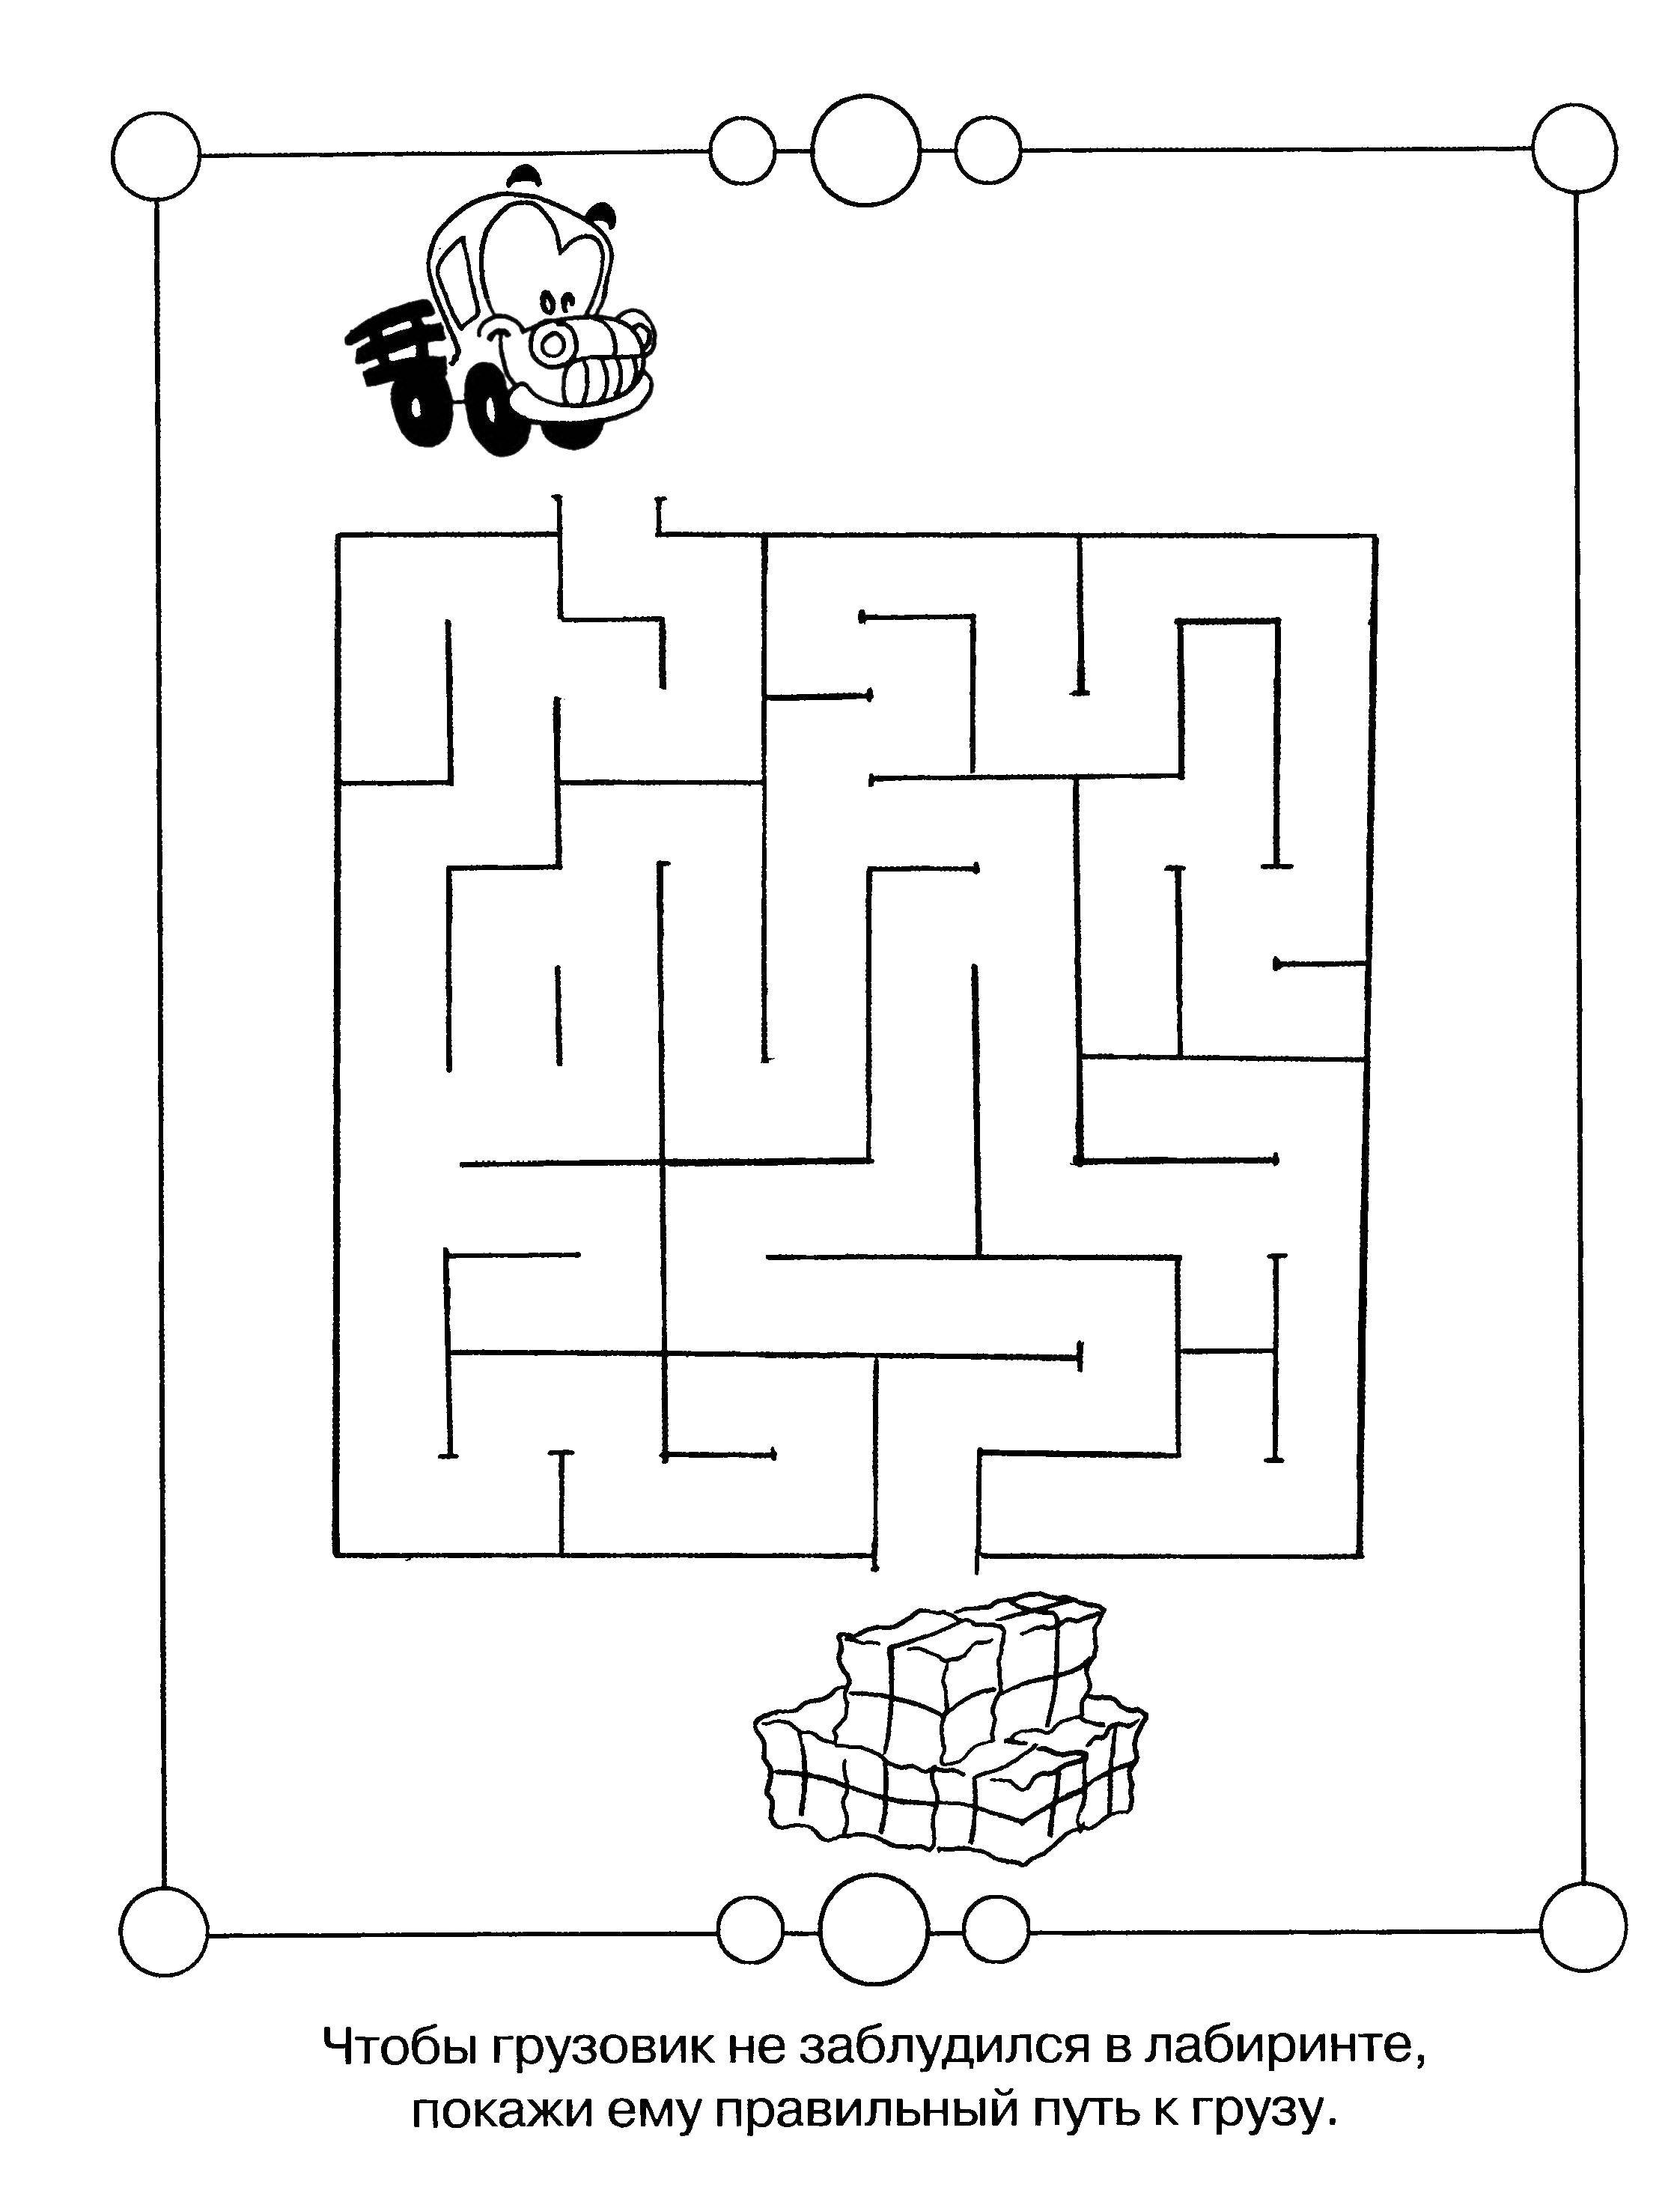 Coloring Take labirintik. Category riddles for kids. Tags:  Maze, logic.